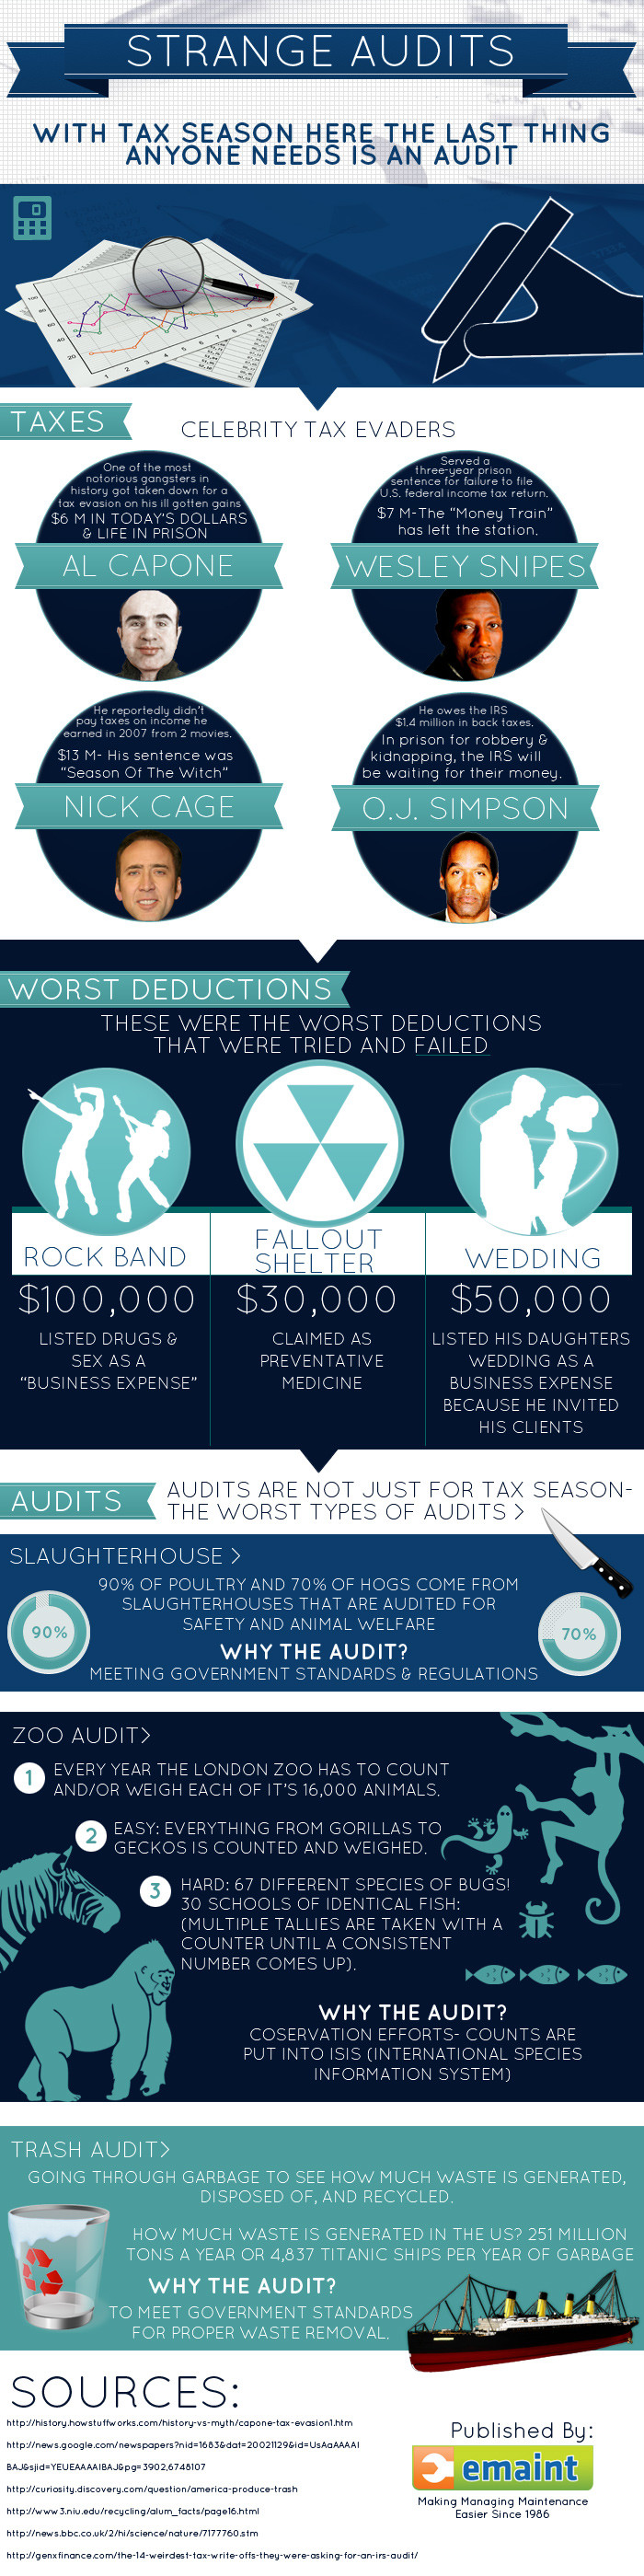 Strange audits with tax season infographic